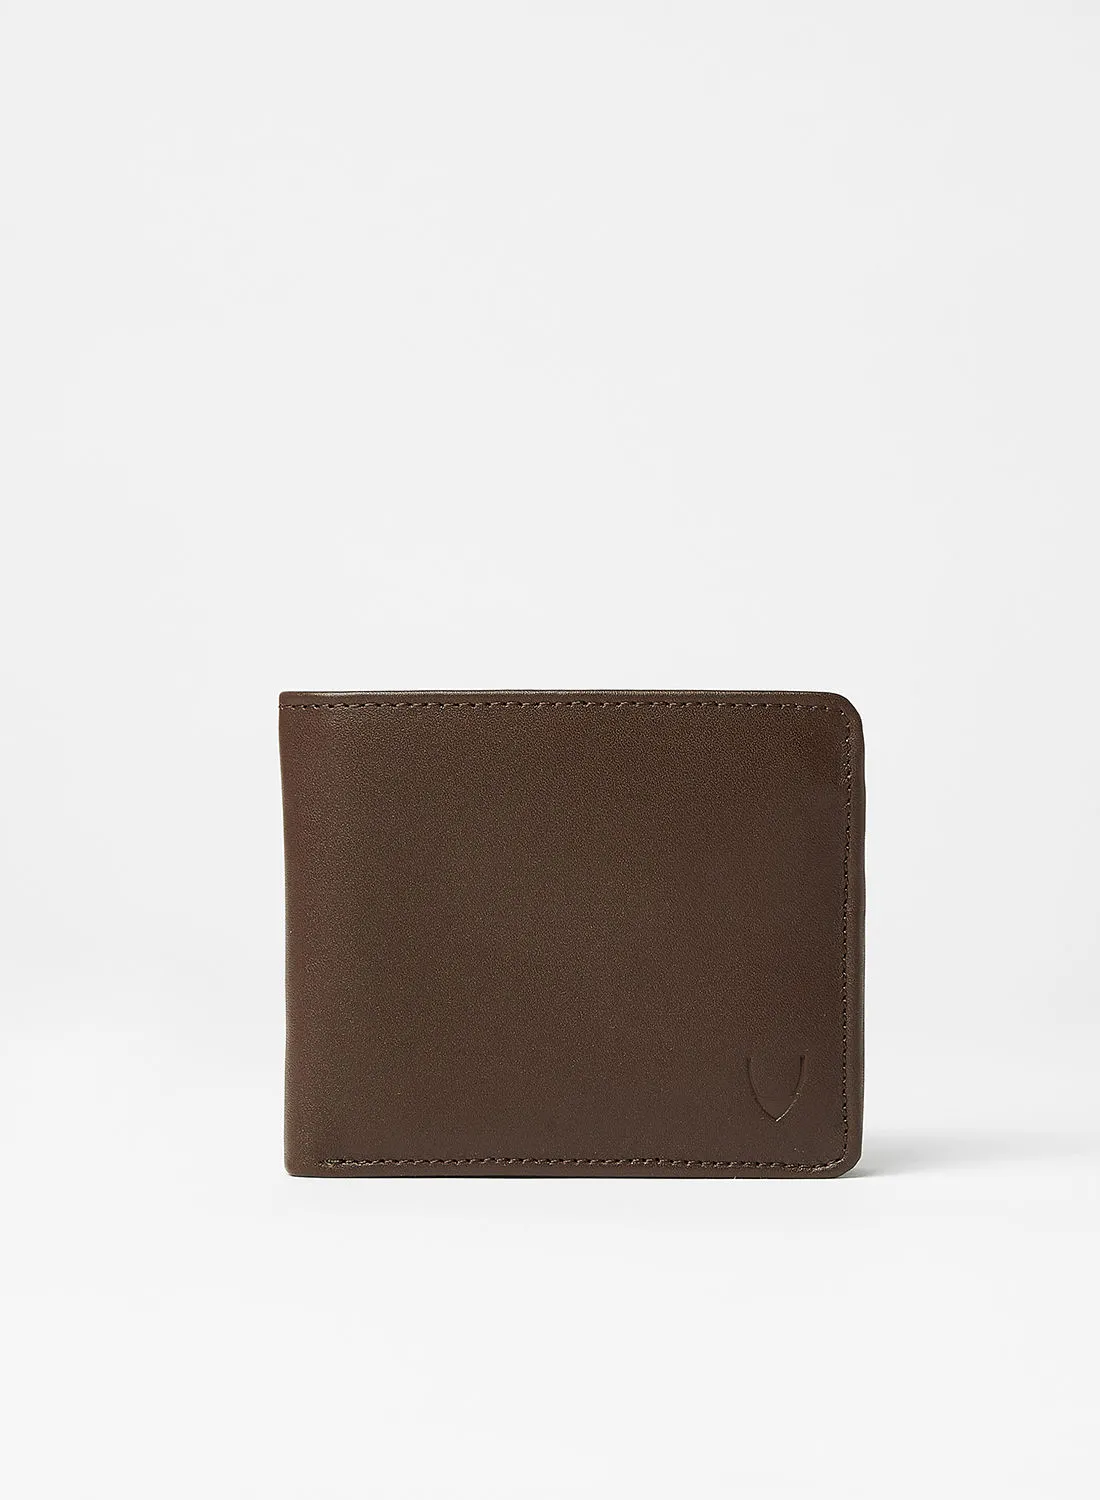 Hidesign Bi-Fold Leather Wallet Brown